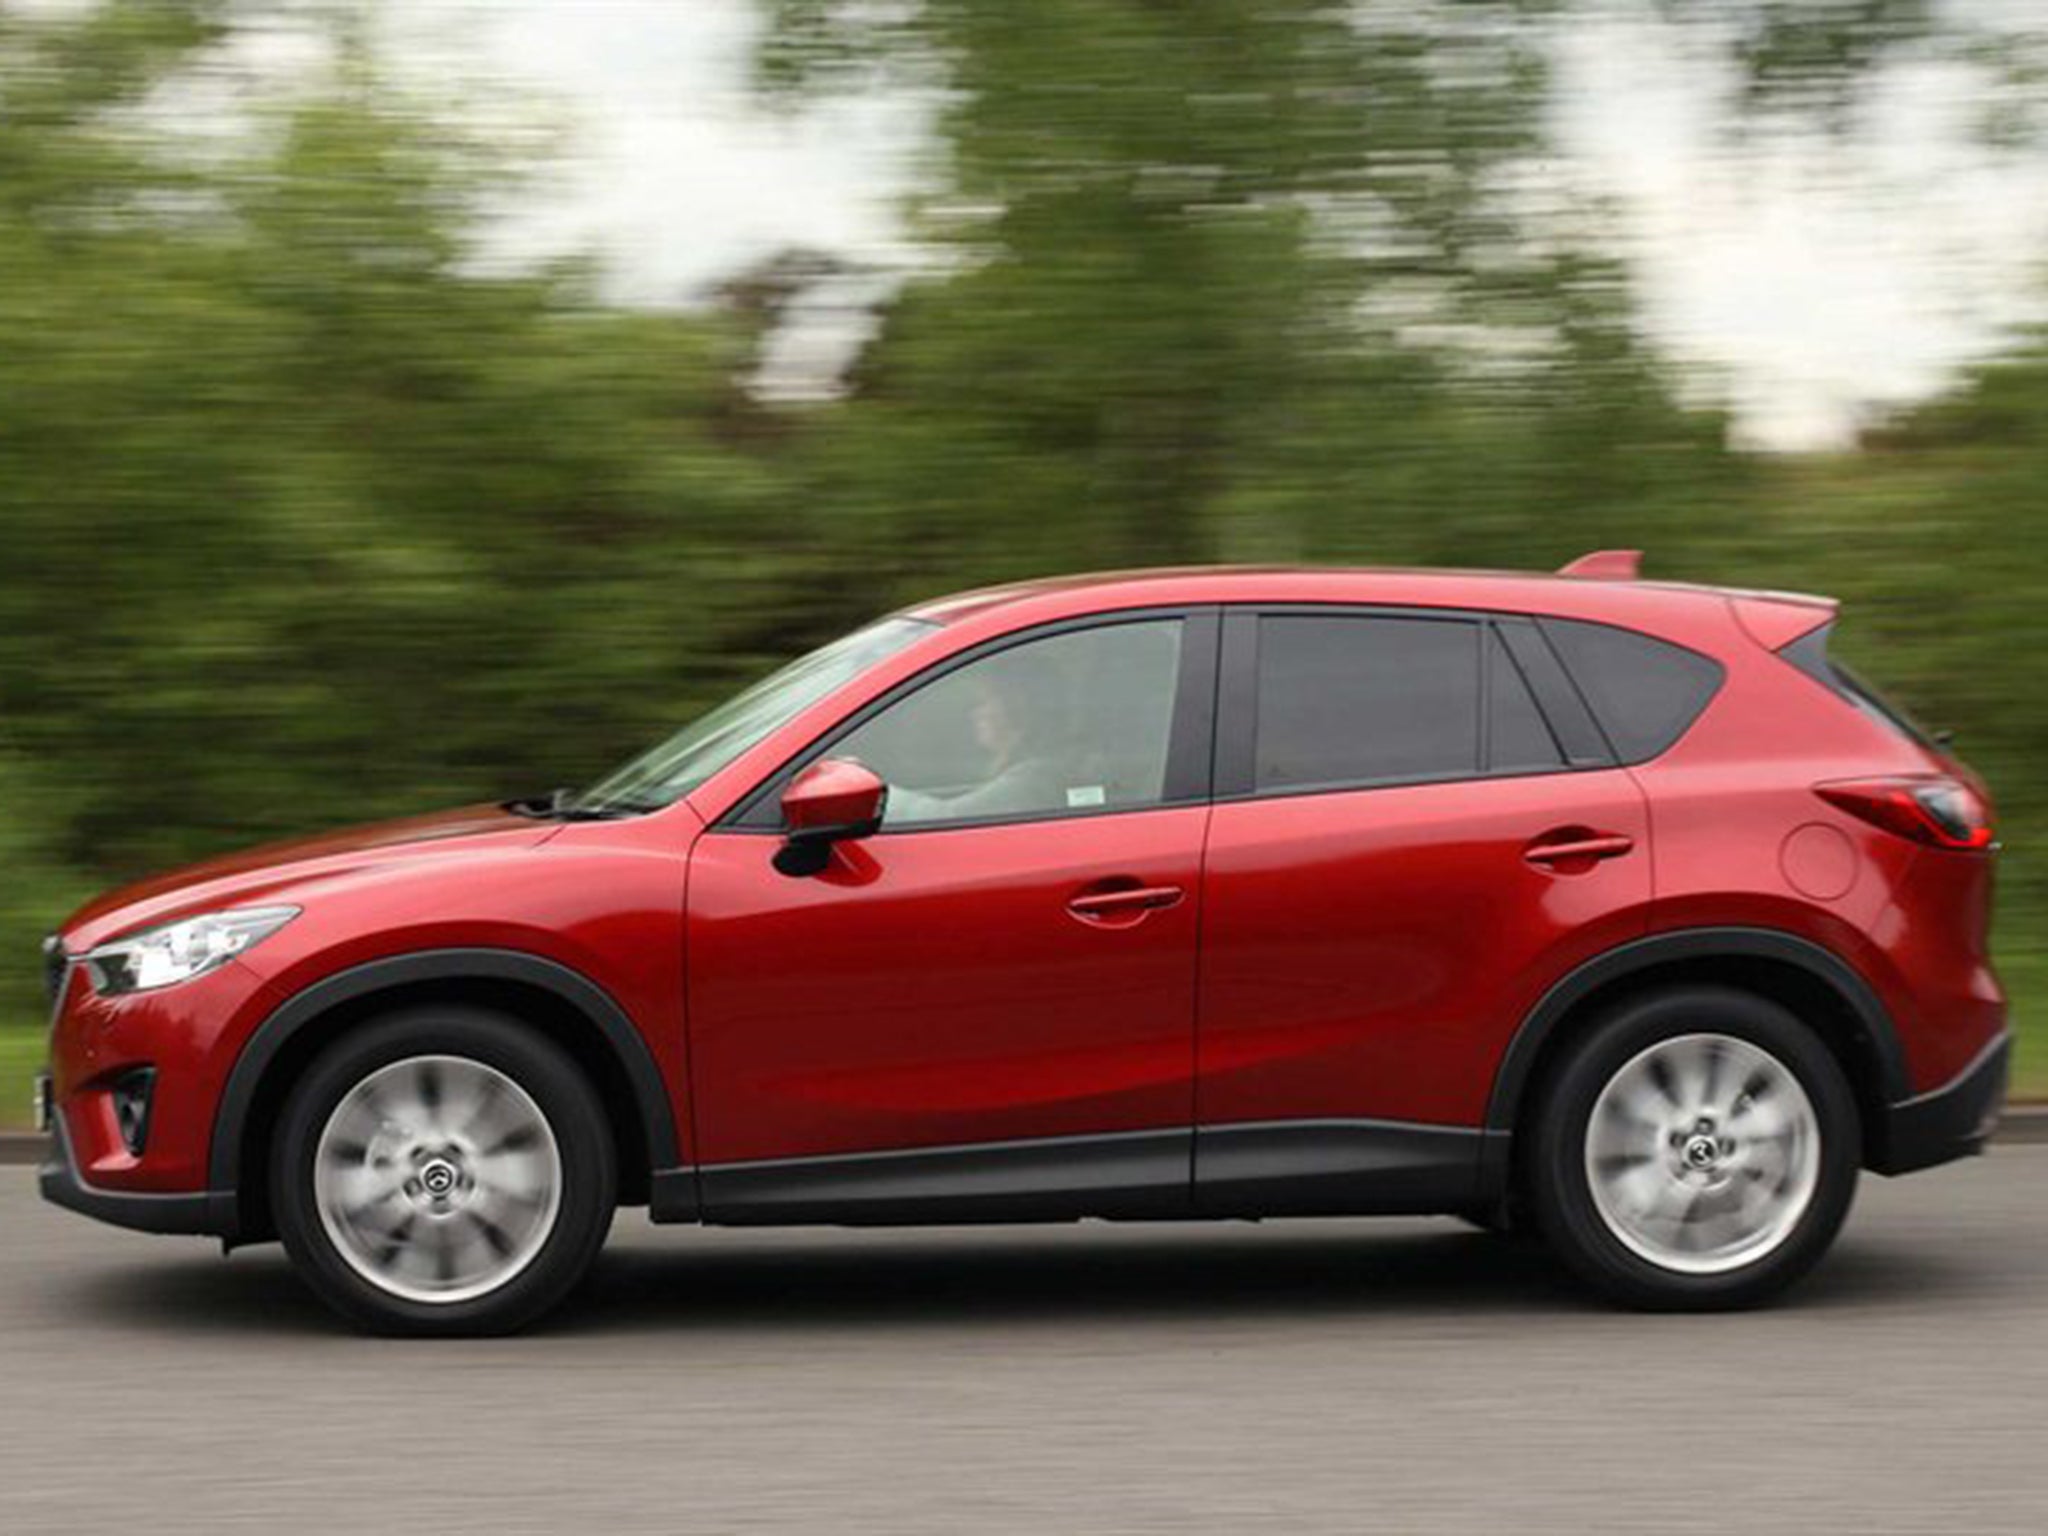 The Mazda delivers a rewarding drive